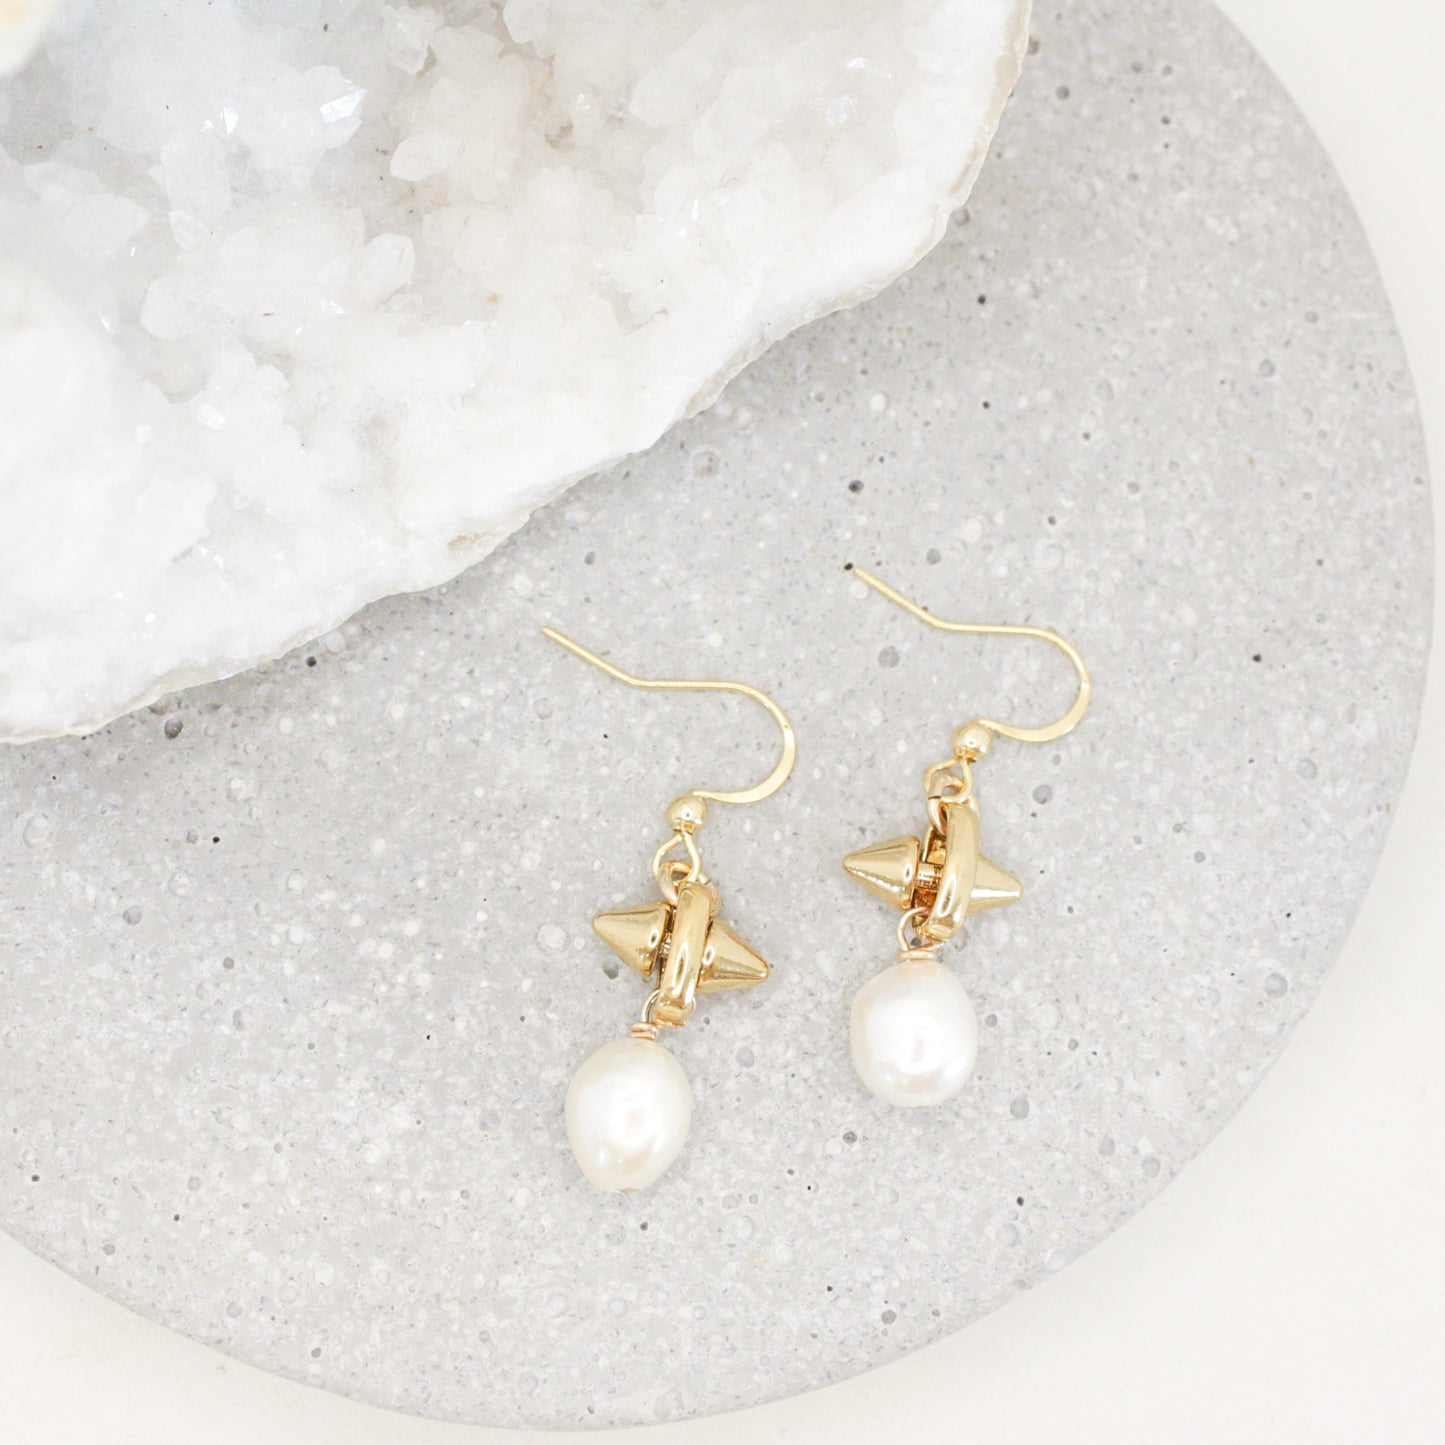 Andi Pearl & Spike Earrings :: 24k Gold Filled